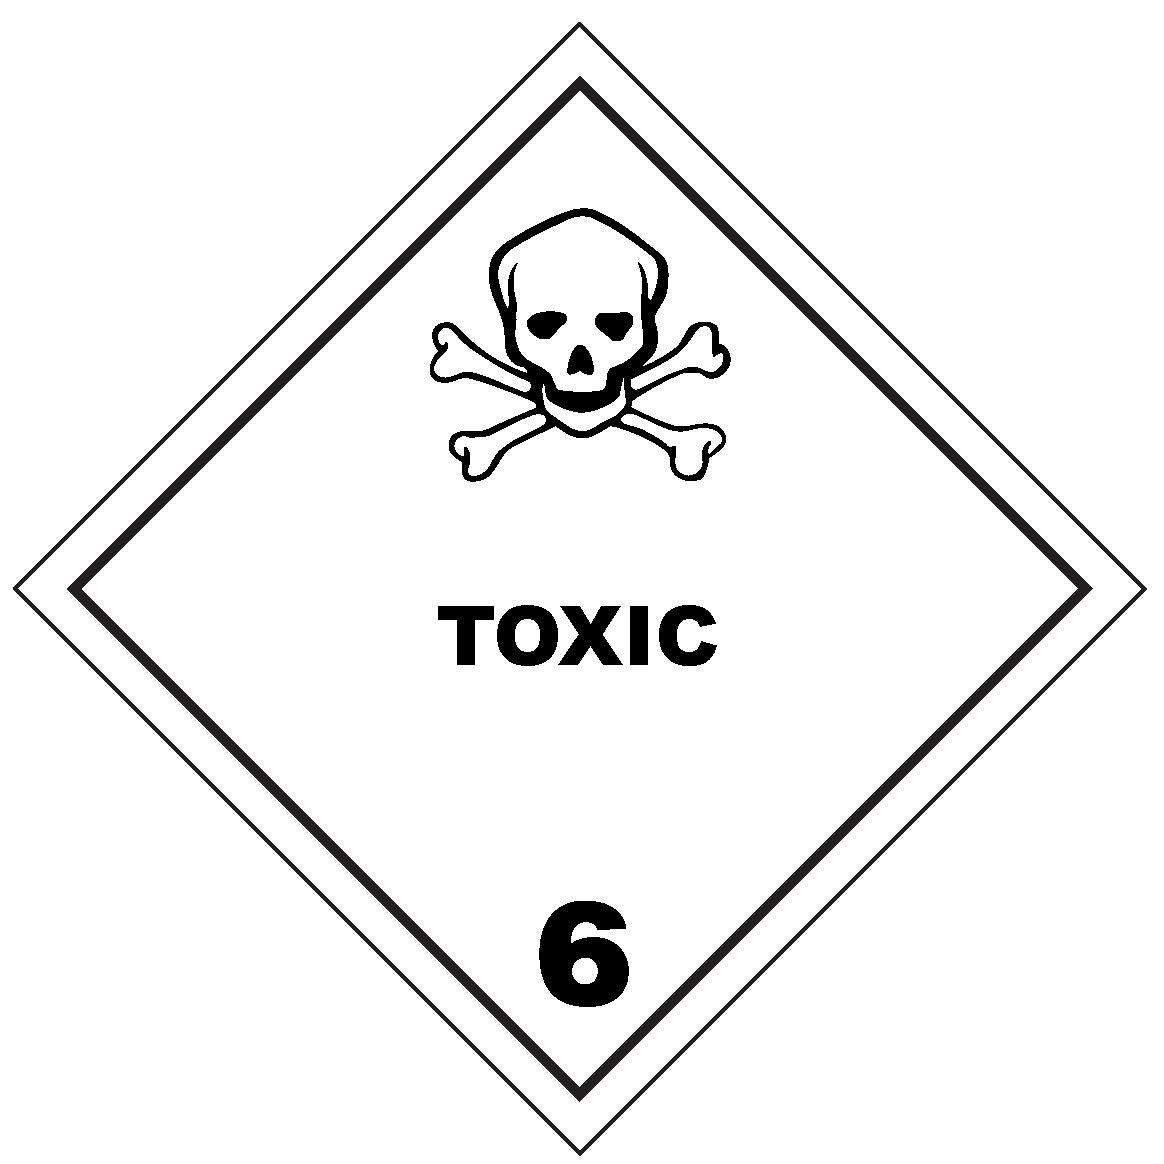 Toxic Hazard Class 6